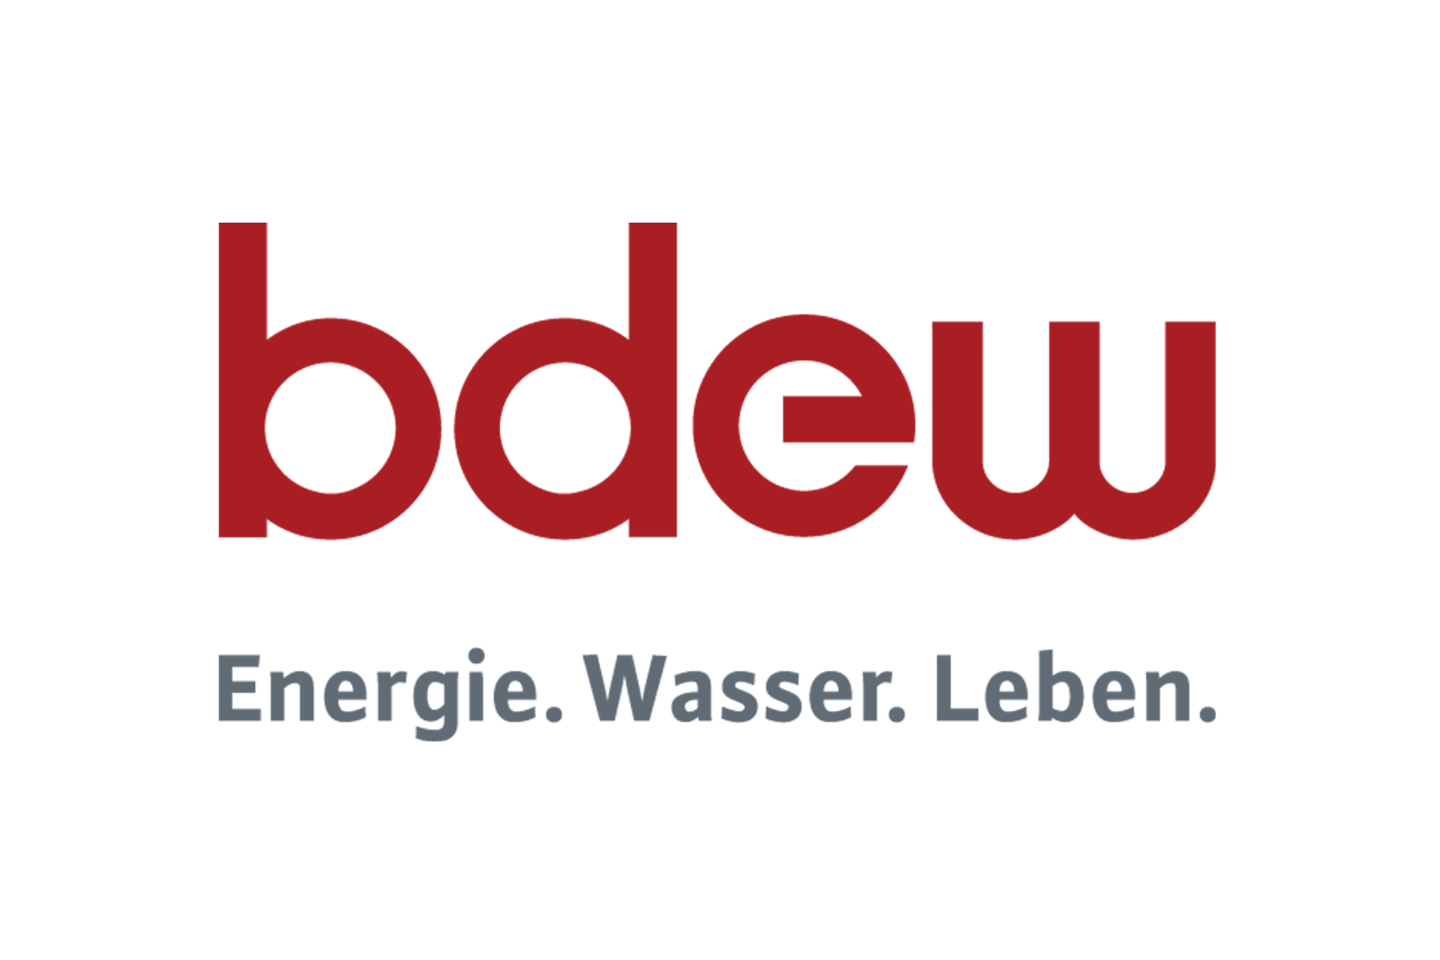 bdew_logo